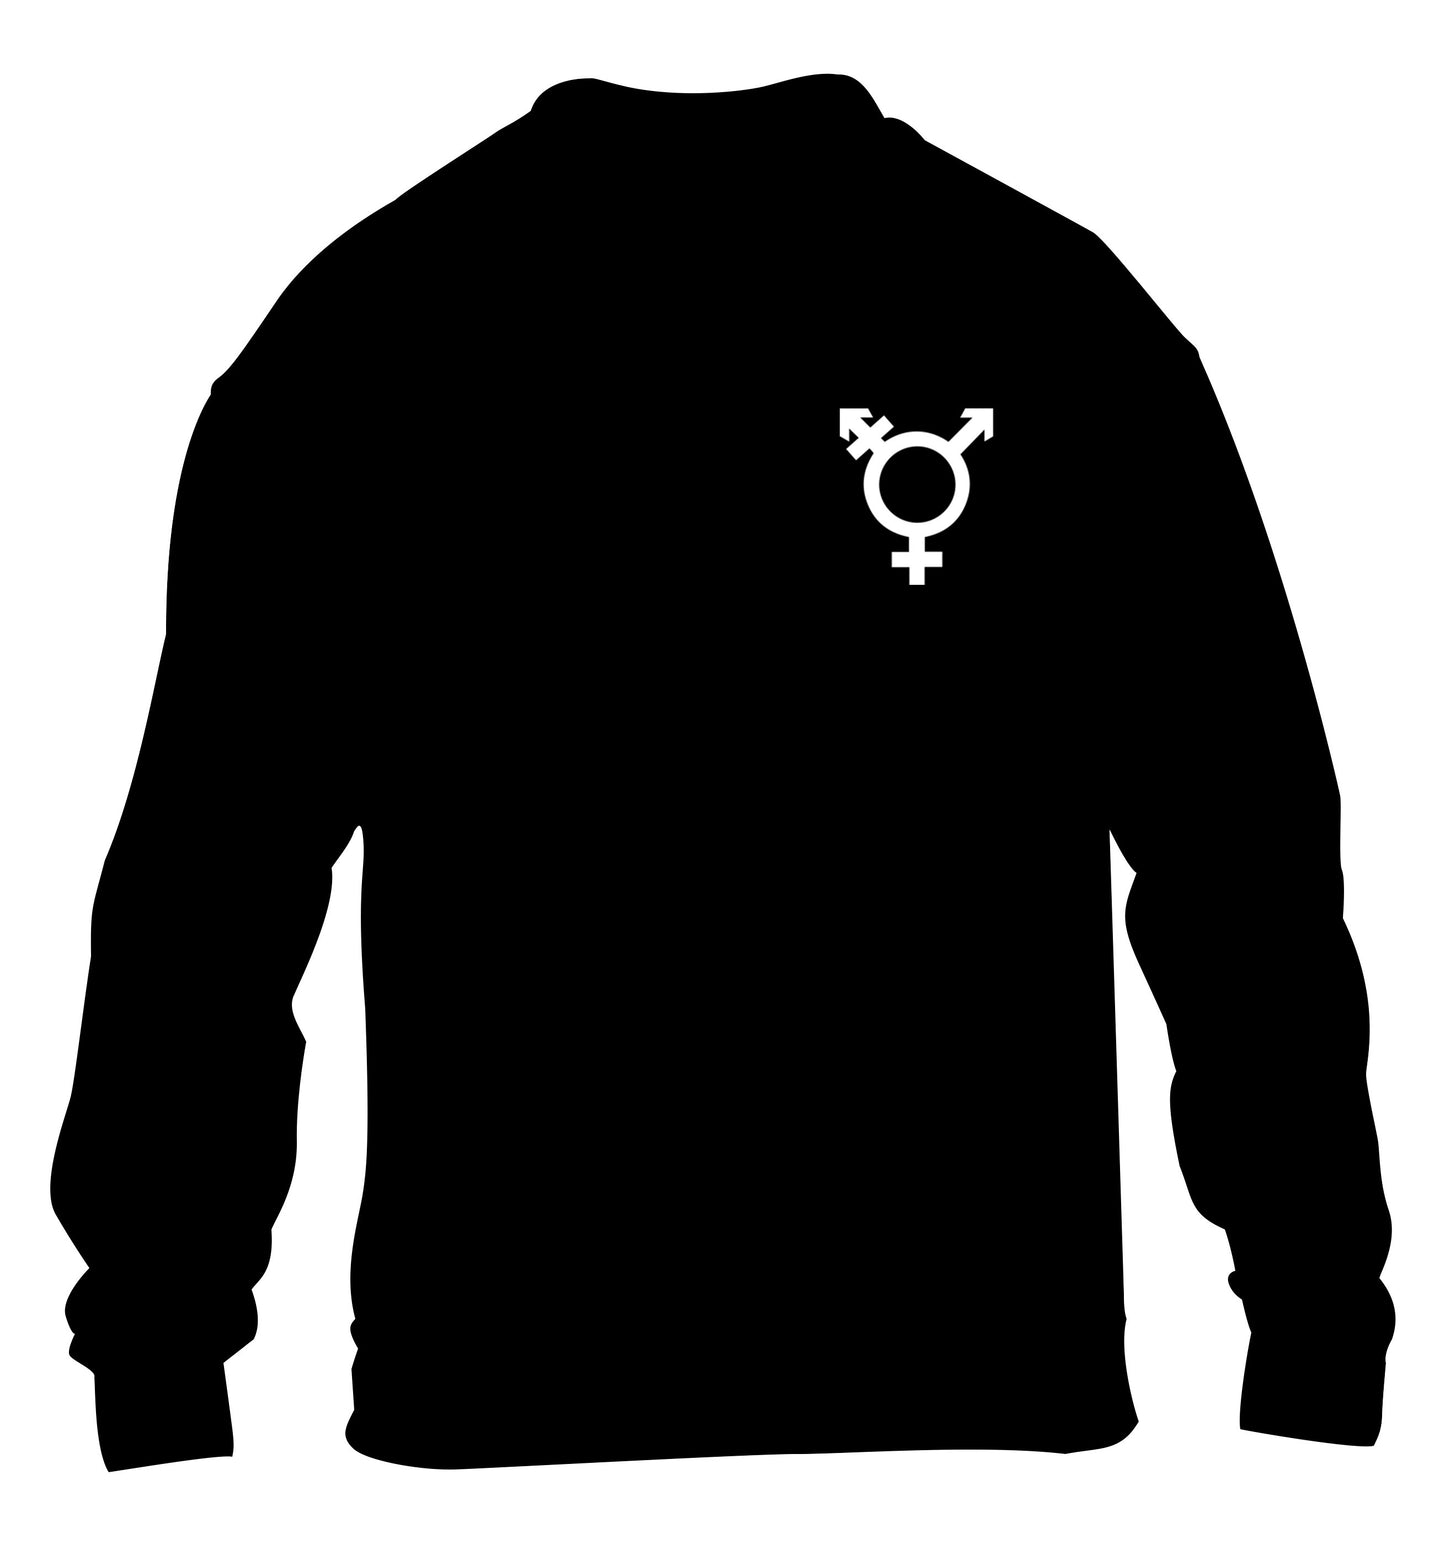 Trans gender symbol pocket children's black sweater 12-14 Years